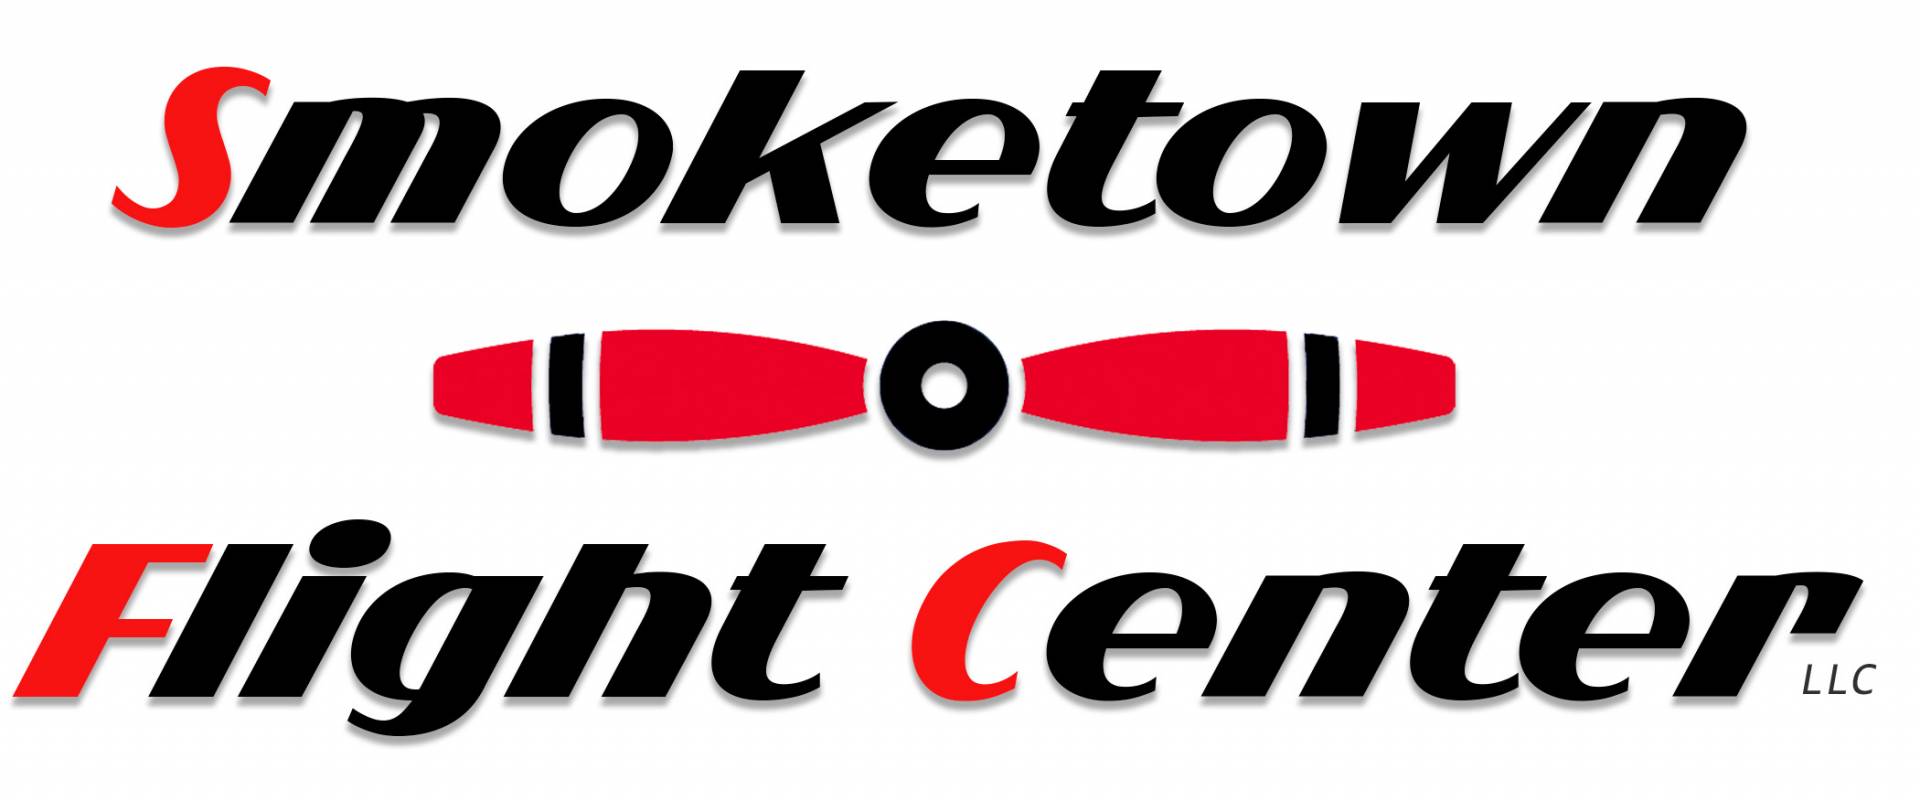 Smoketown Flight Center LLC